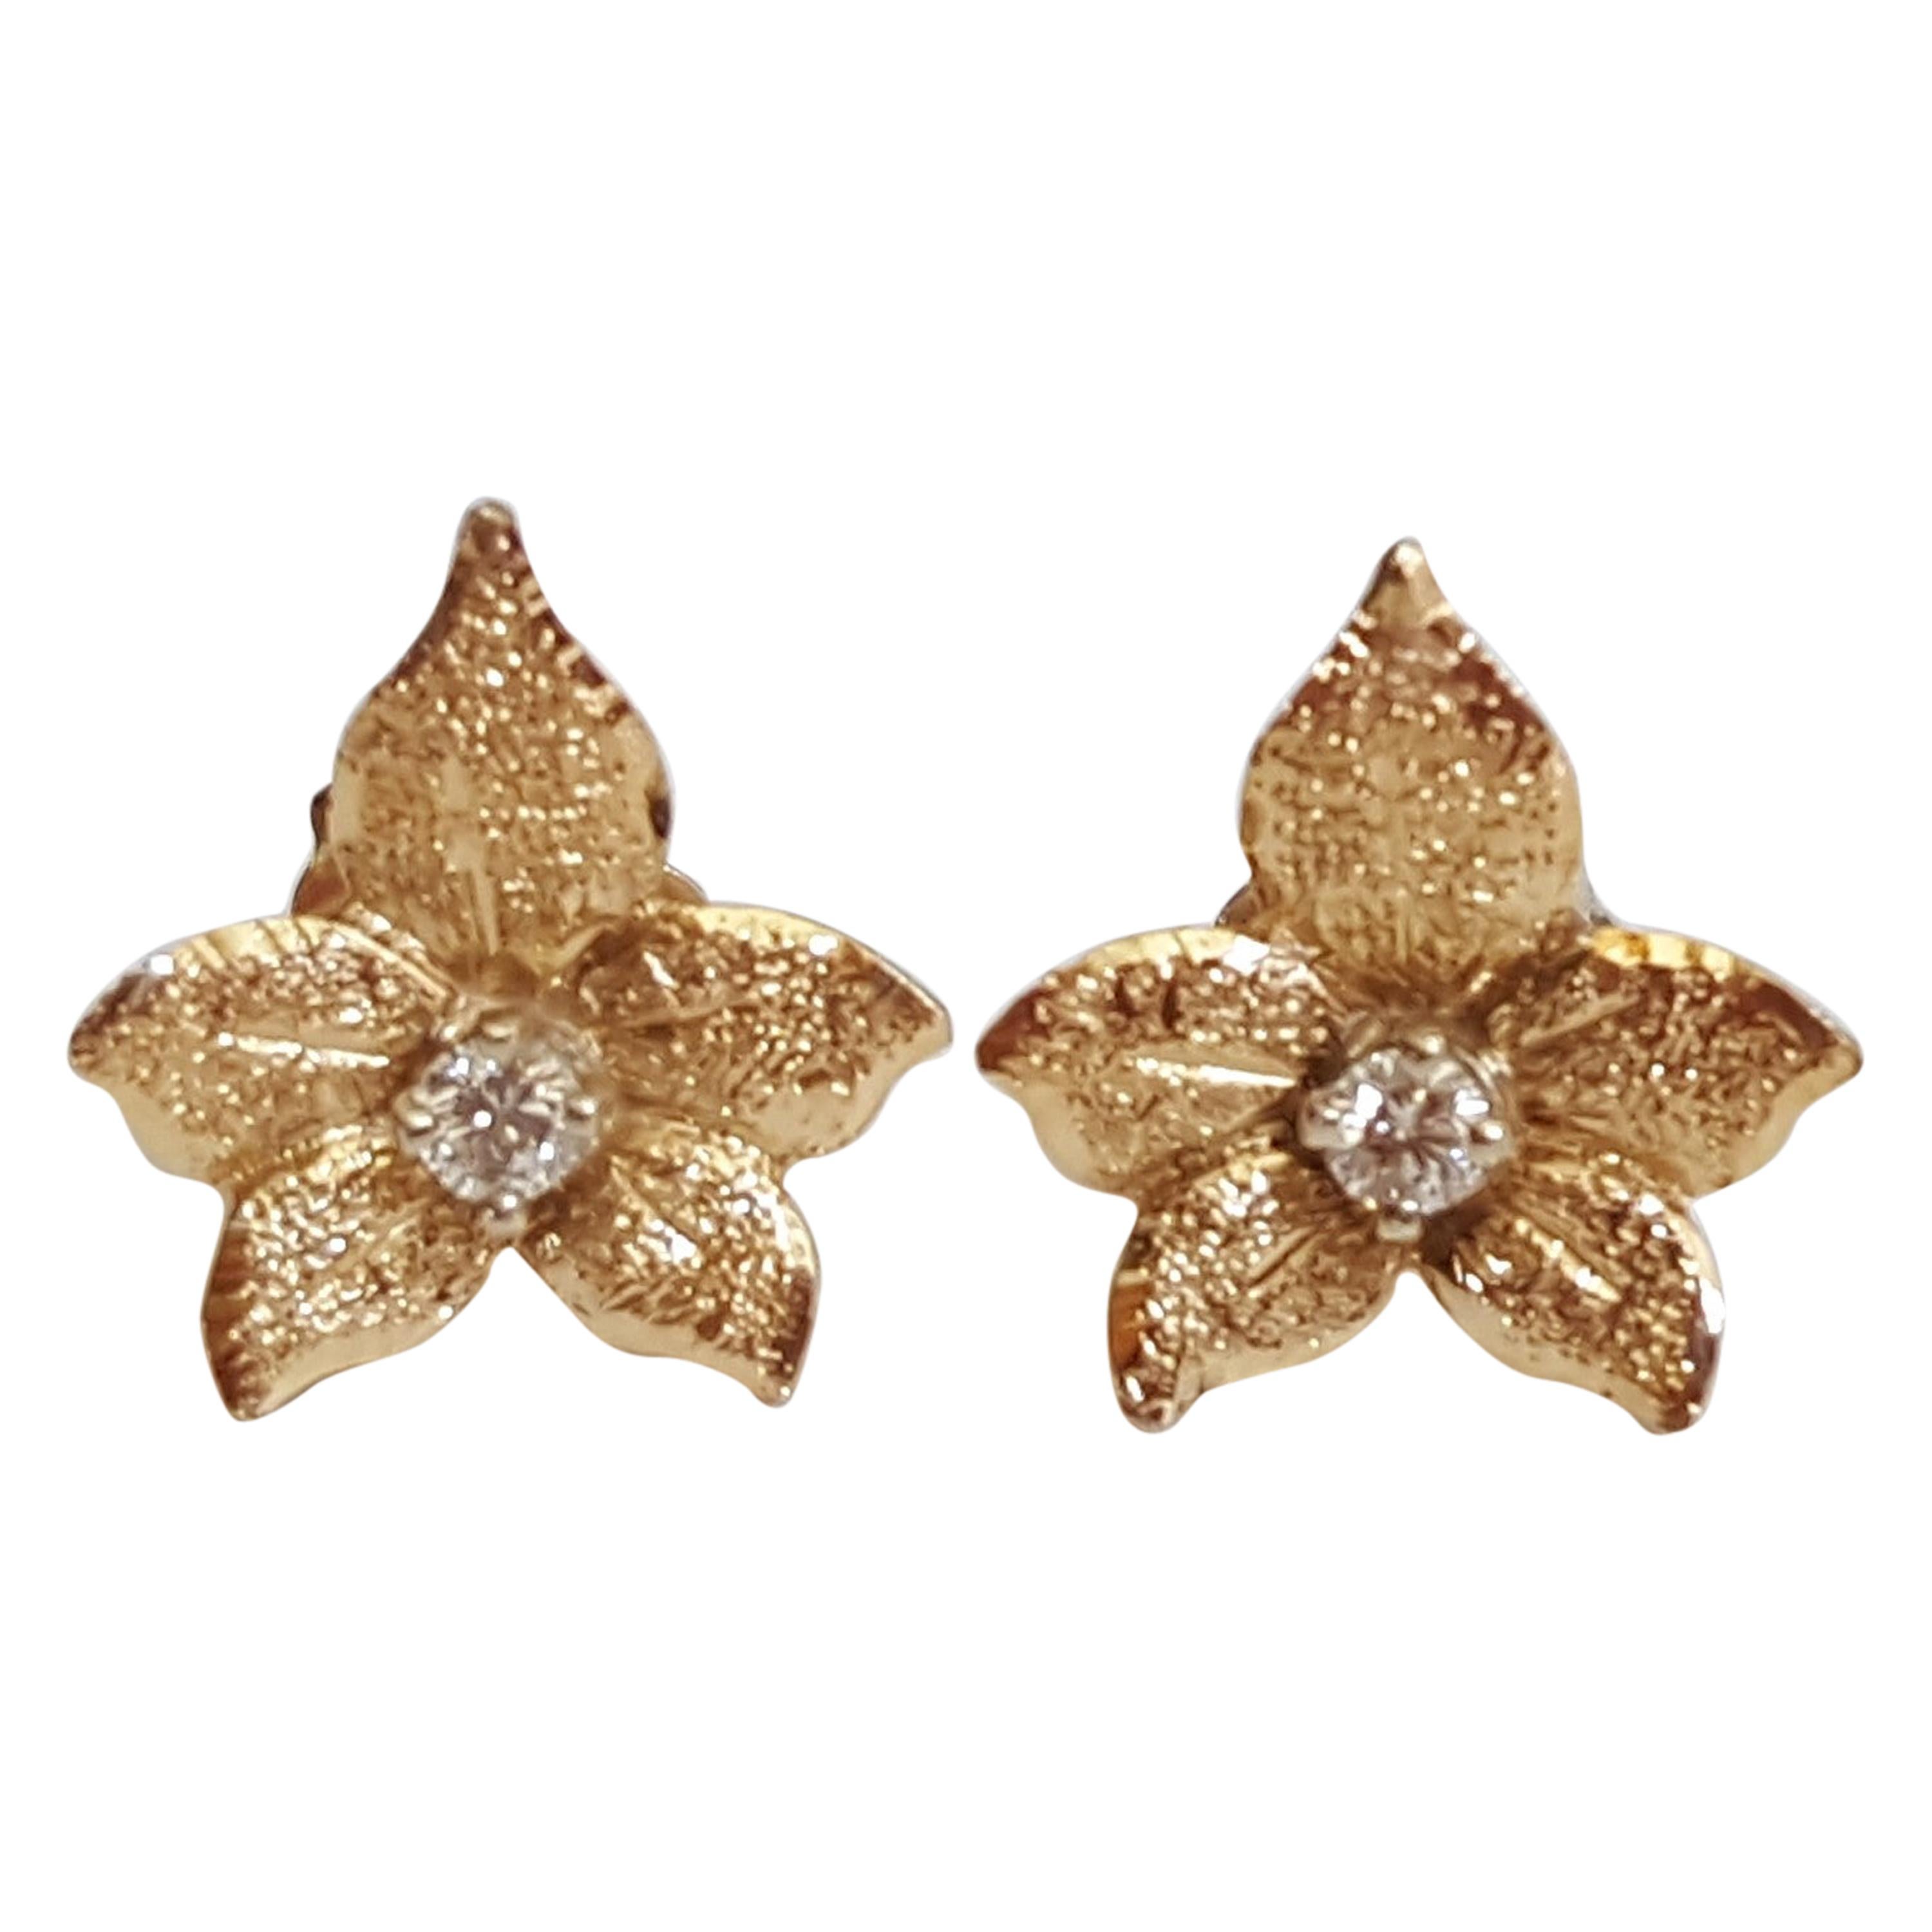 14 Karat Yellow Gold Diamond Earrings, Floral Leaf Design, Friction Post